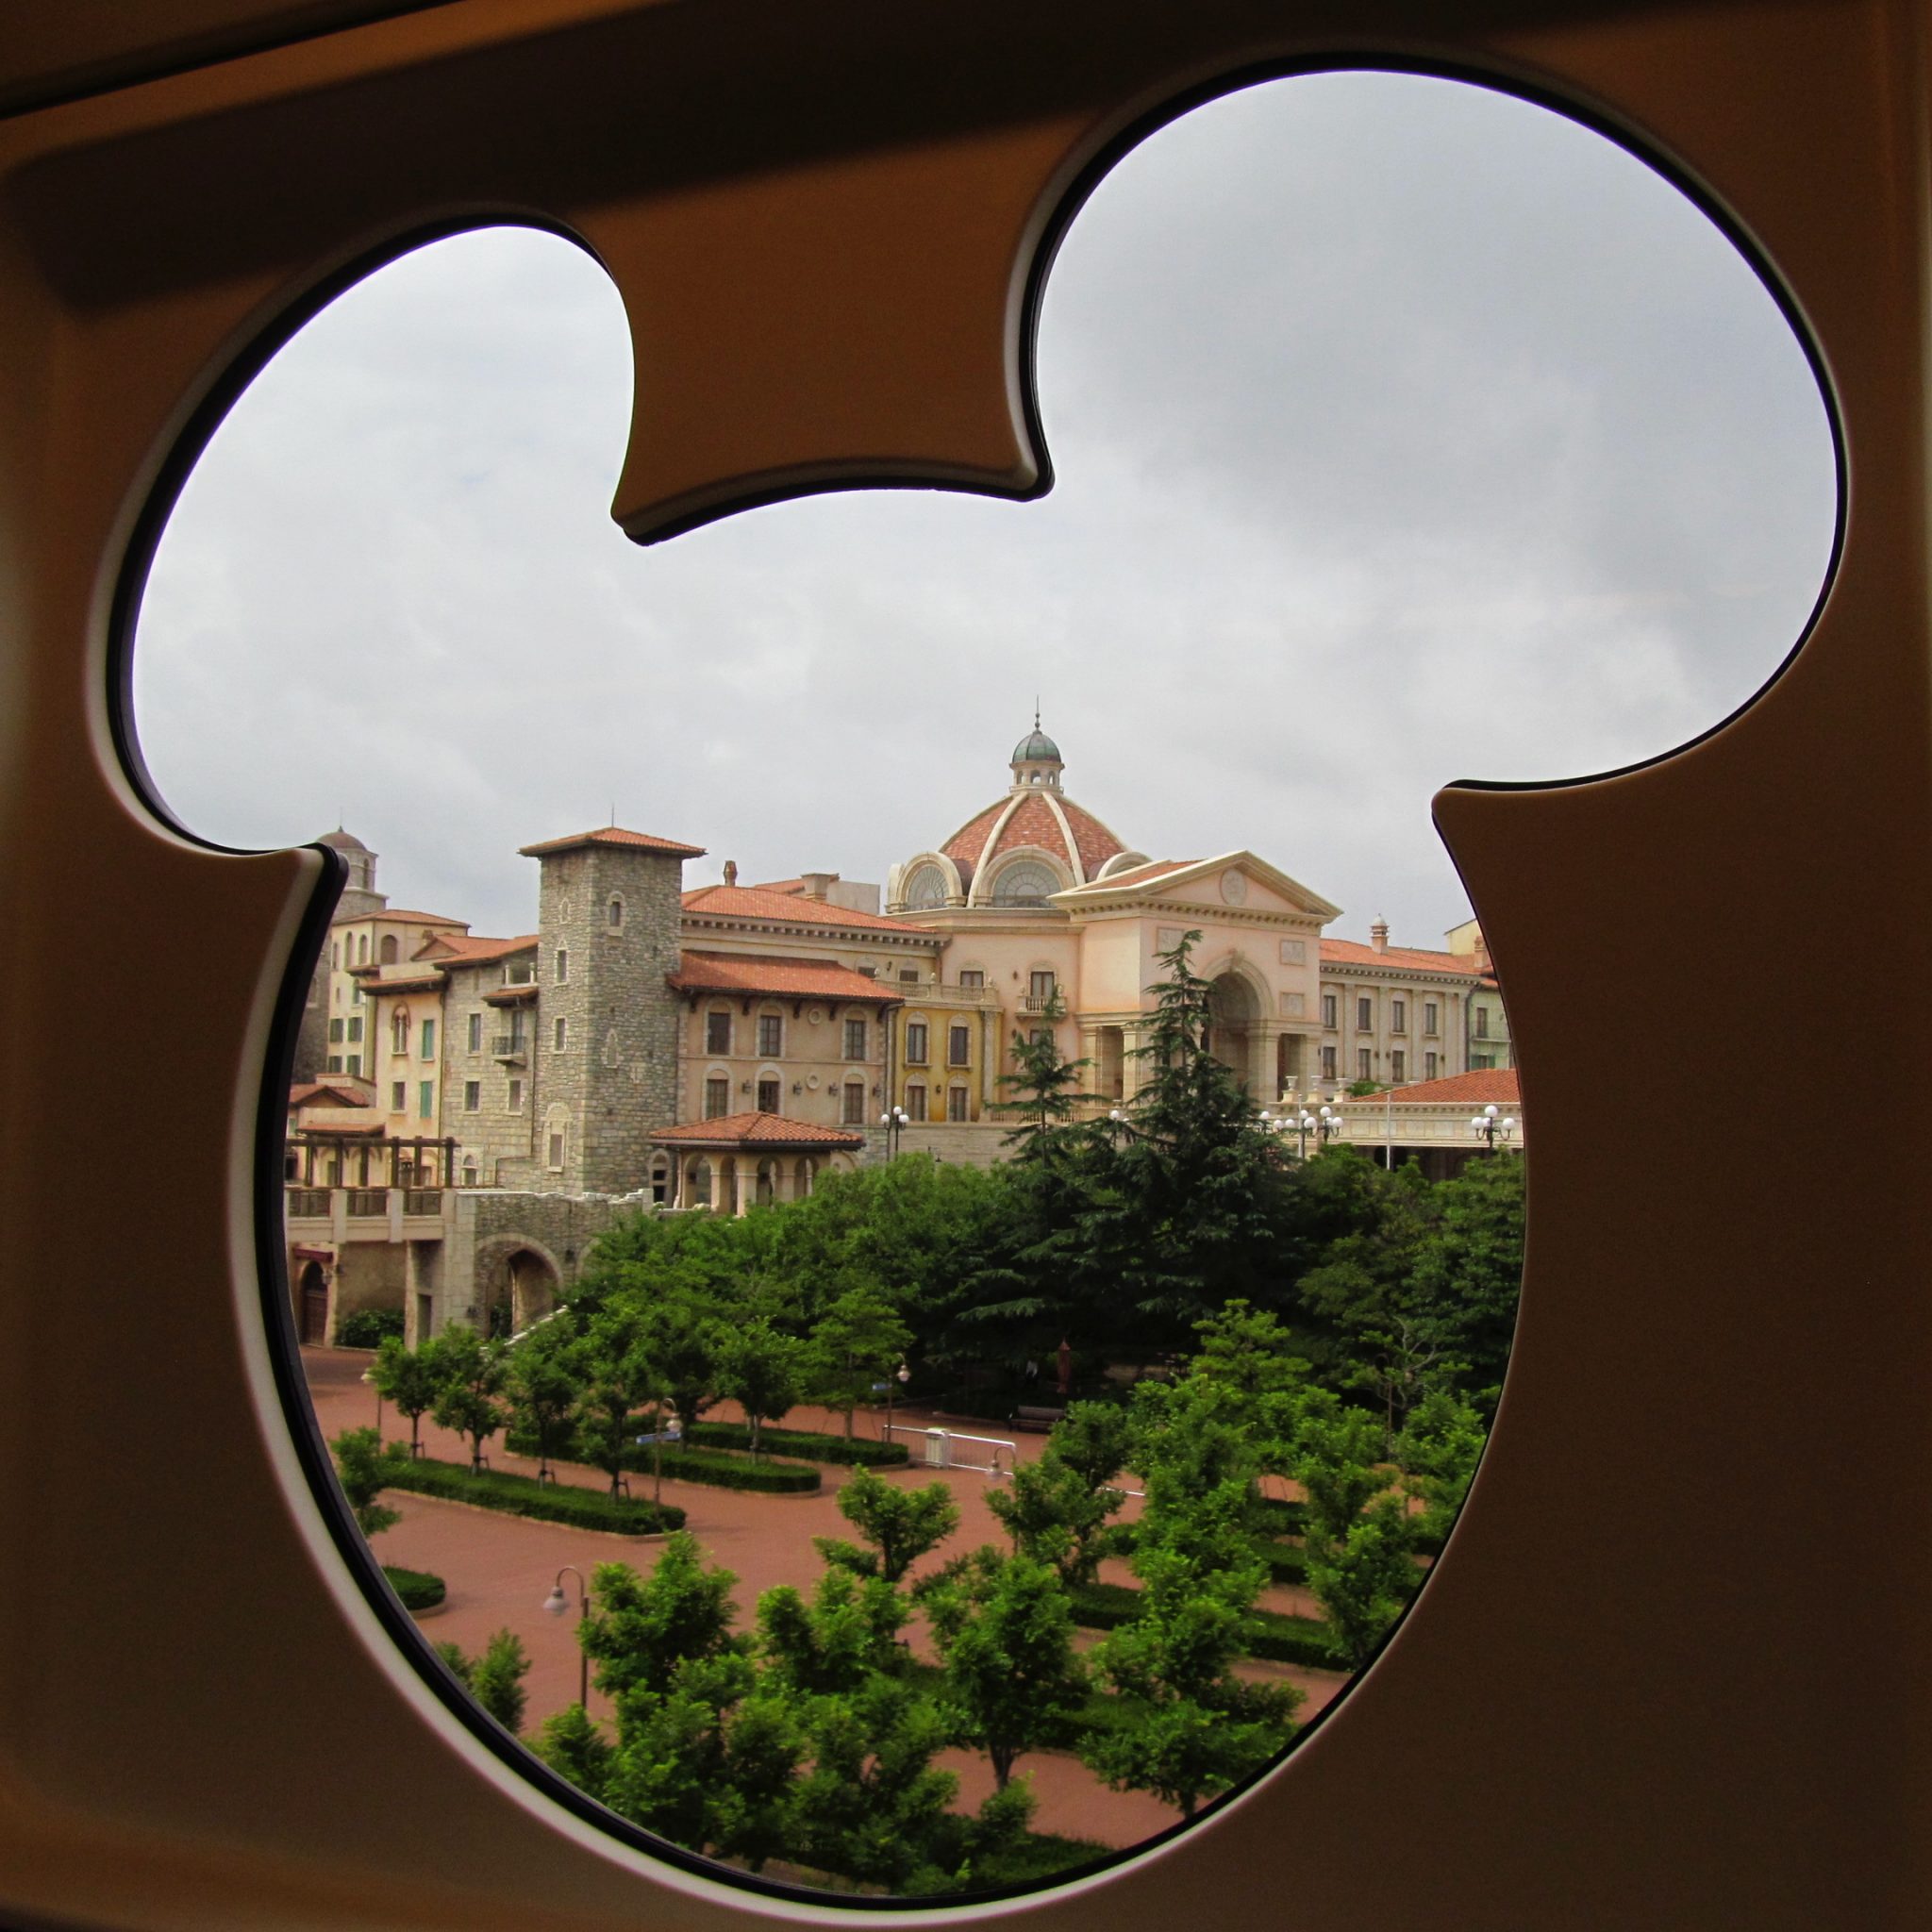 ResortLoop.com Episode 472 – A Trip Report: Every Disney Park Around The Globe